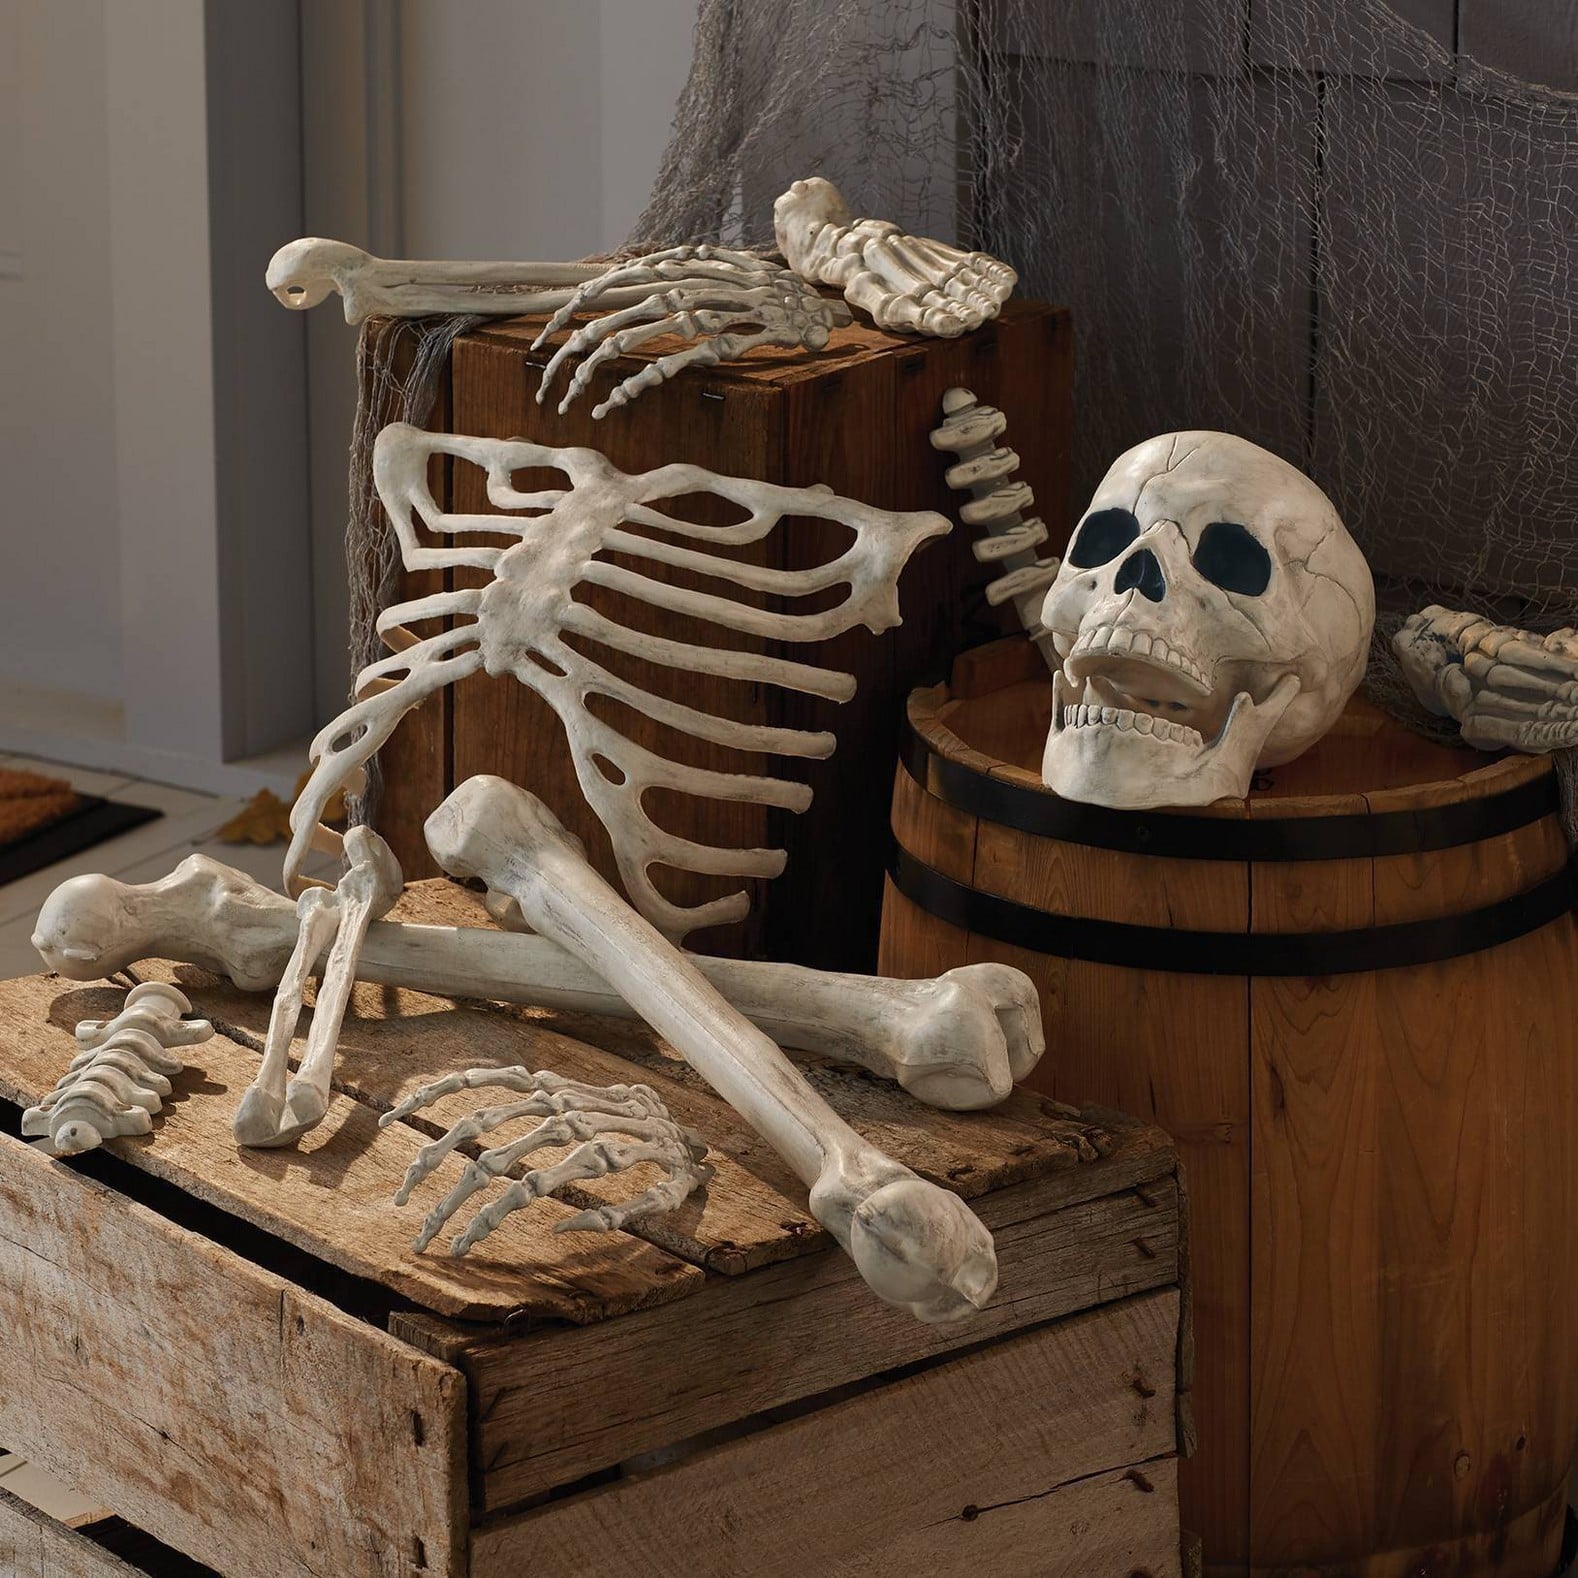 For Skele-Fun Everywhere: Skeleton Bag of Bones Halloween Decorative Prop | Deck the Halls With Horror — Target's Outdoor Halloween Decor Is Frightfully Delightful | POPSUGAR Home Photo 15